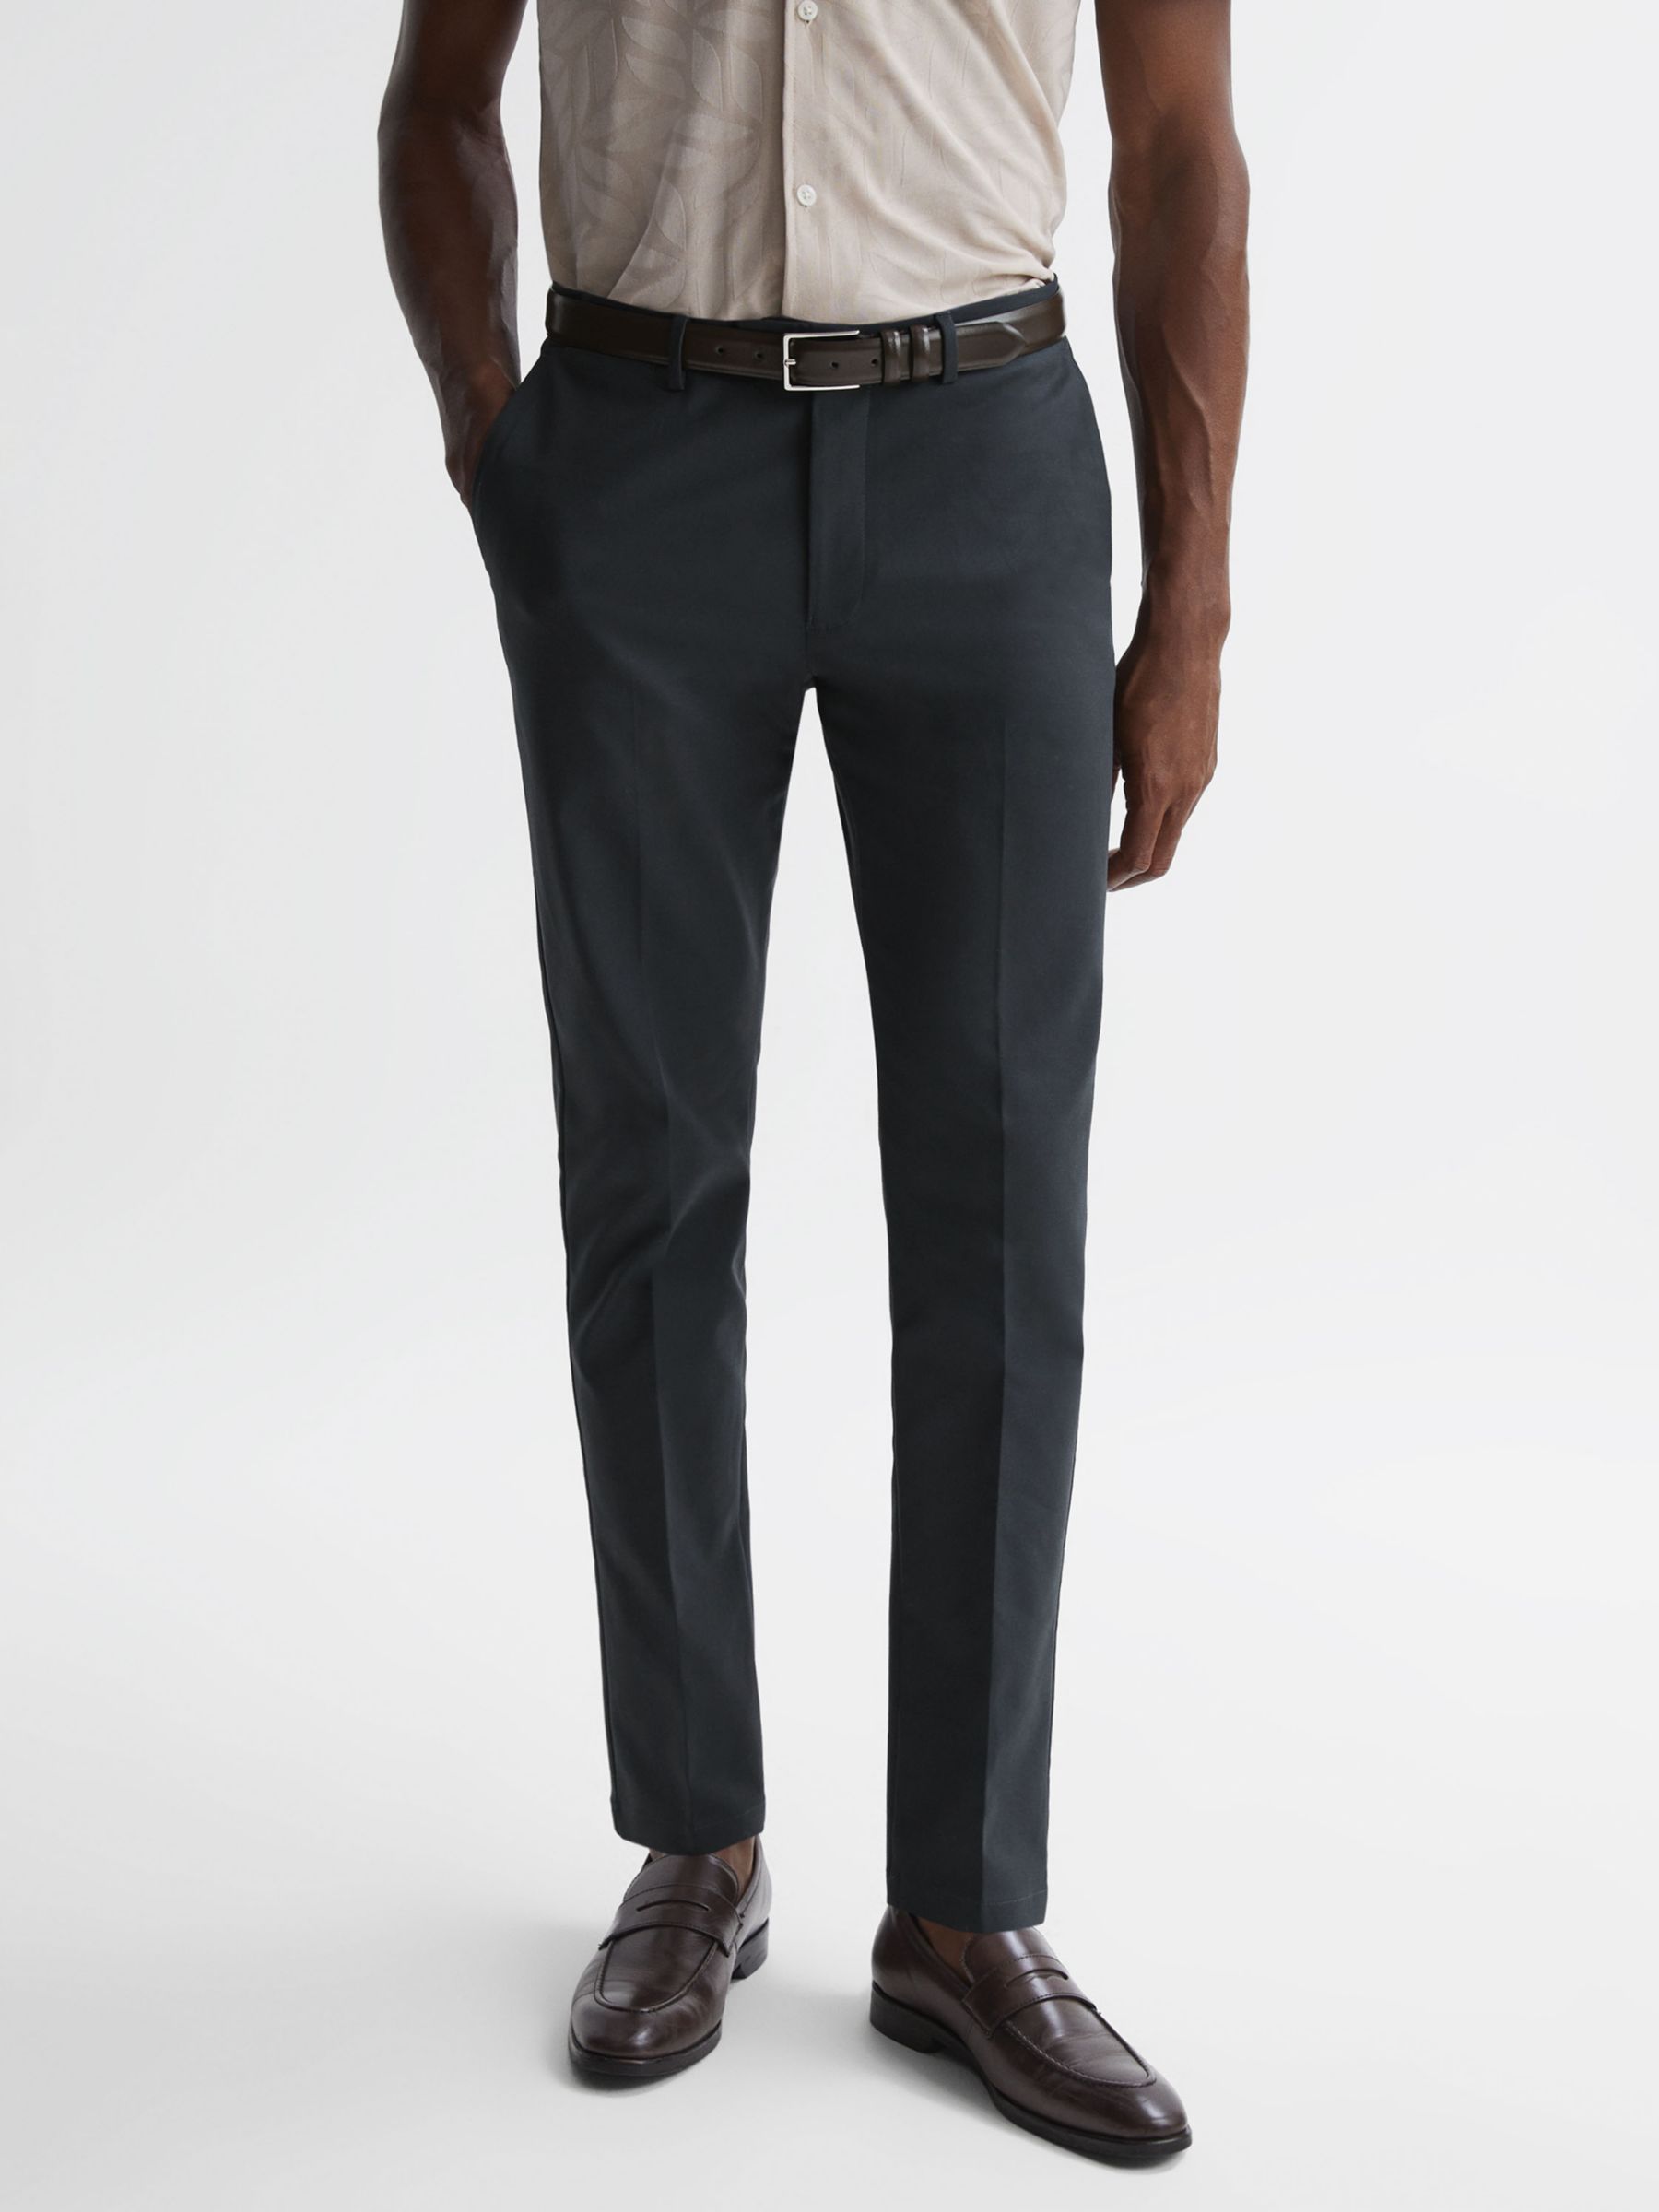 Reiss Eastbury Straight Fit Chino Trousers, Dark Grey, 36R